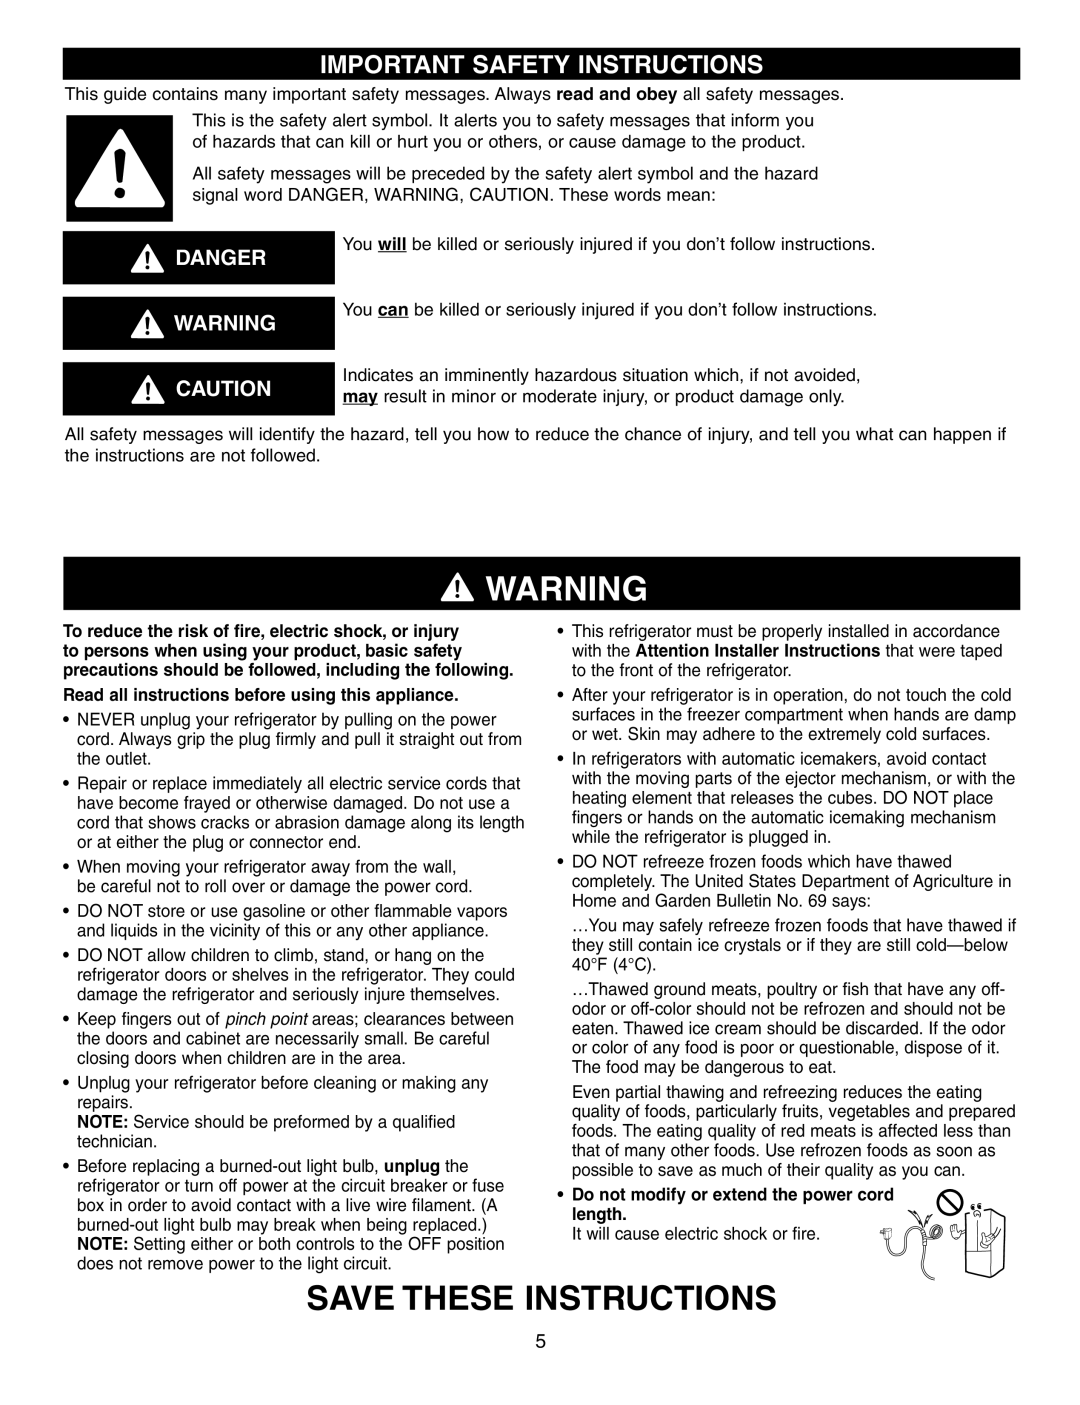 LG Electronics LFX21970, LFX25960, LFX25970 manual Save These Instructions, Important Safety Instructions, Danger 